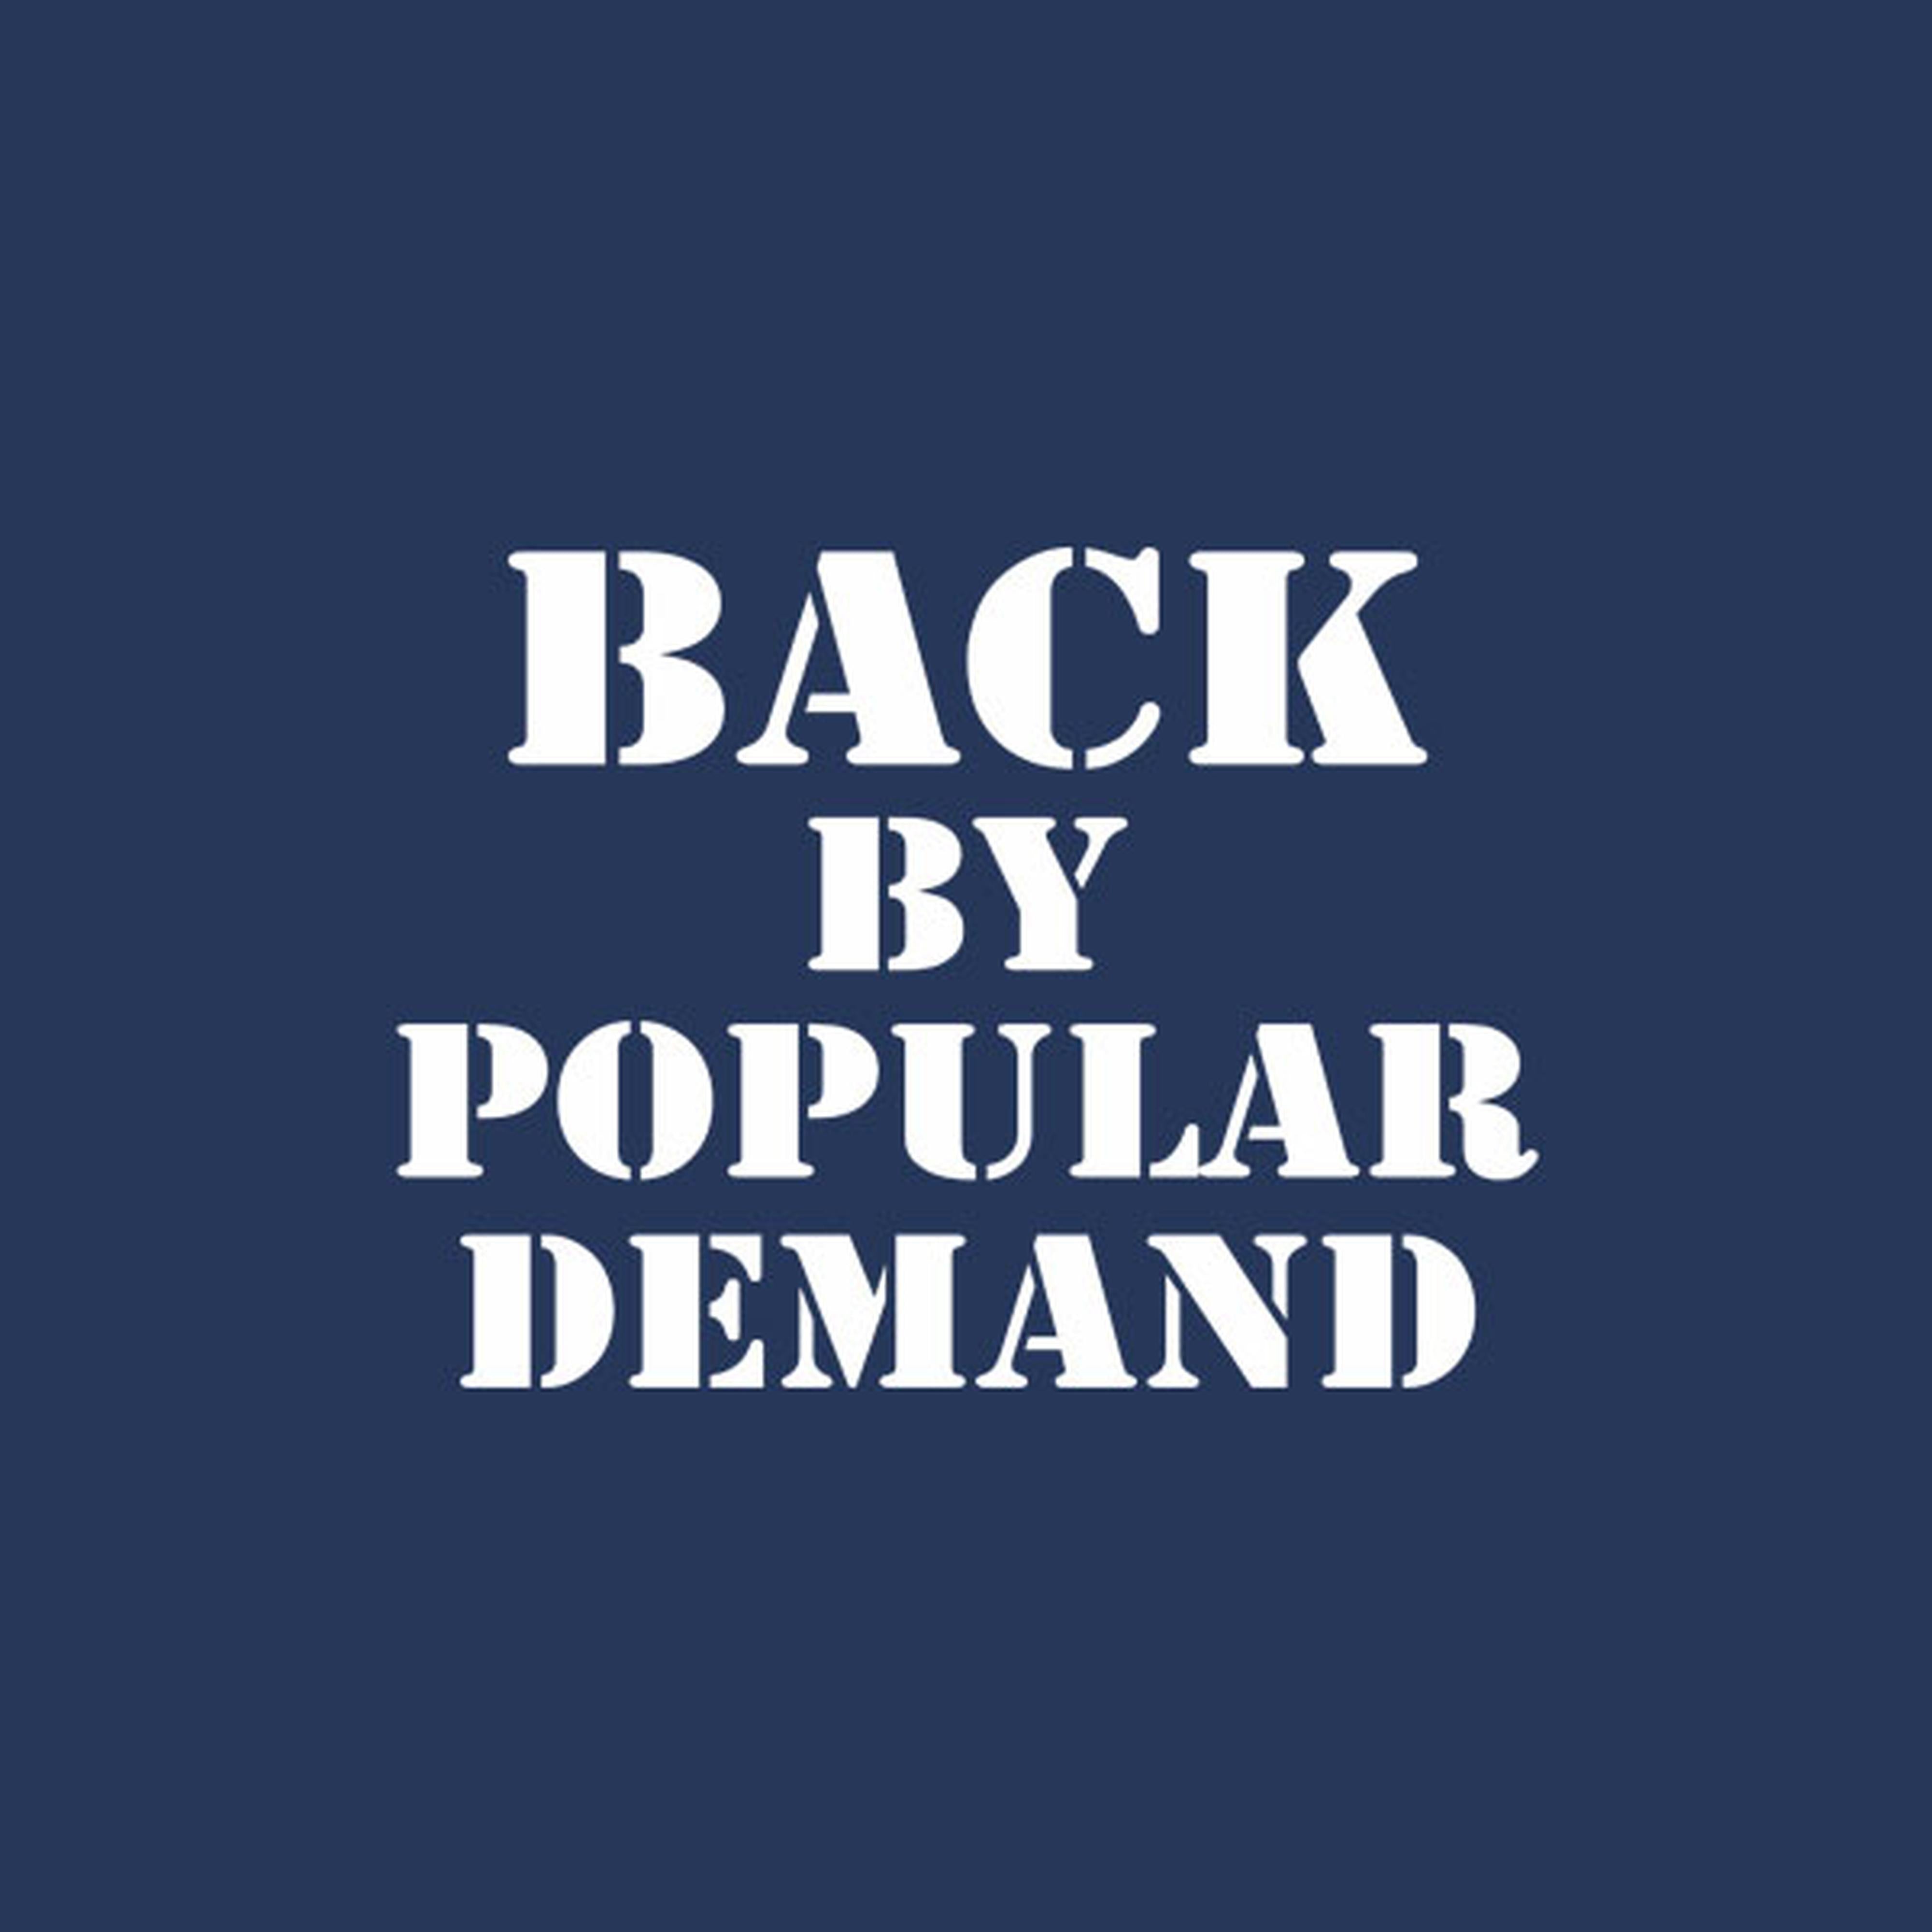 Back by popular demand - T-shirt